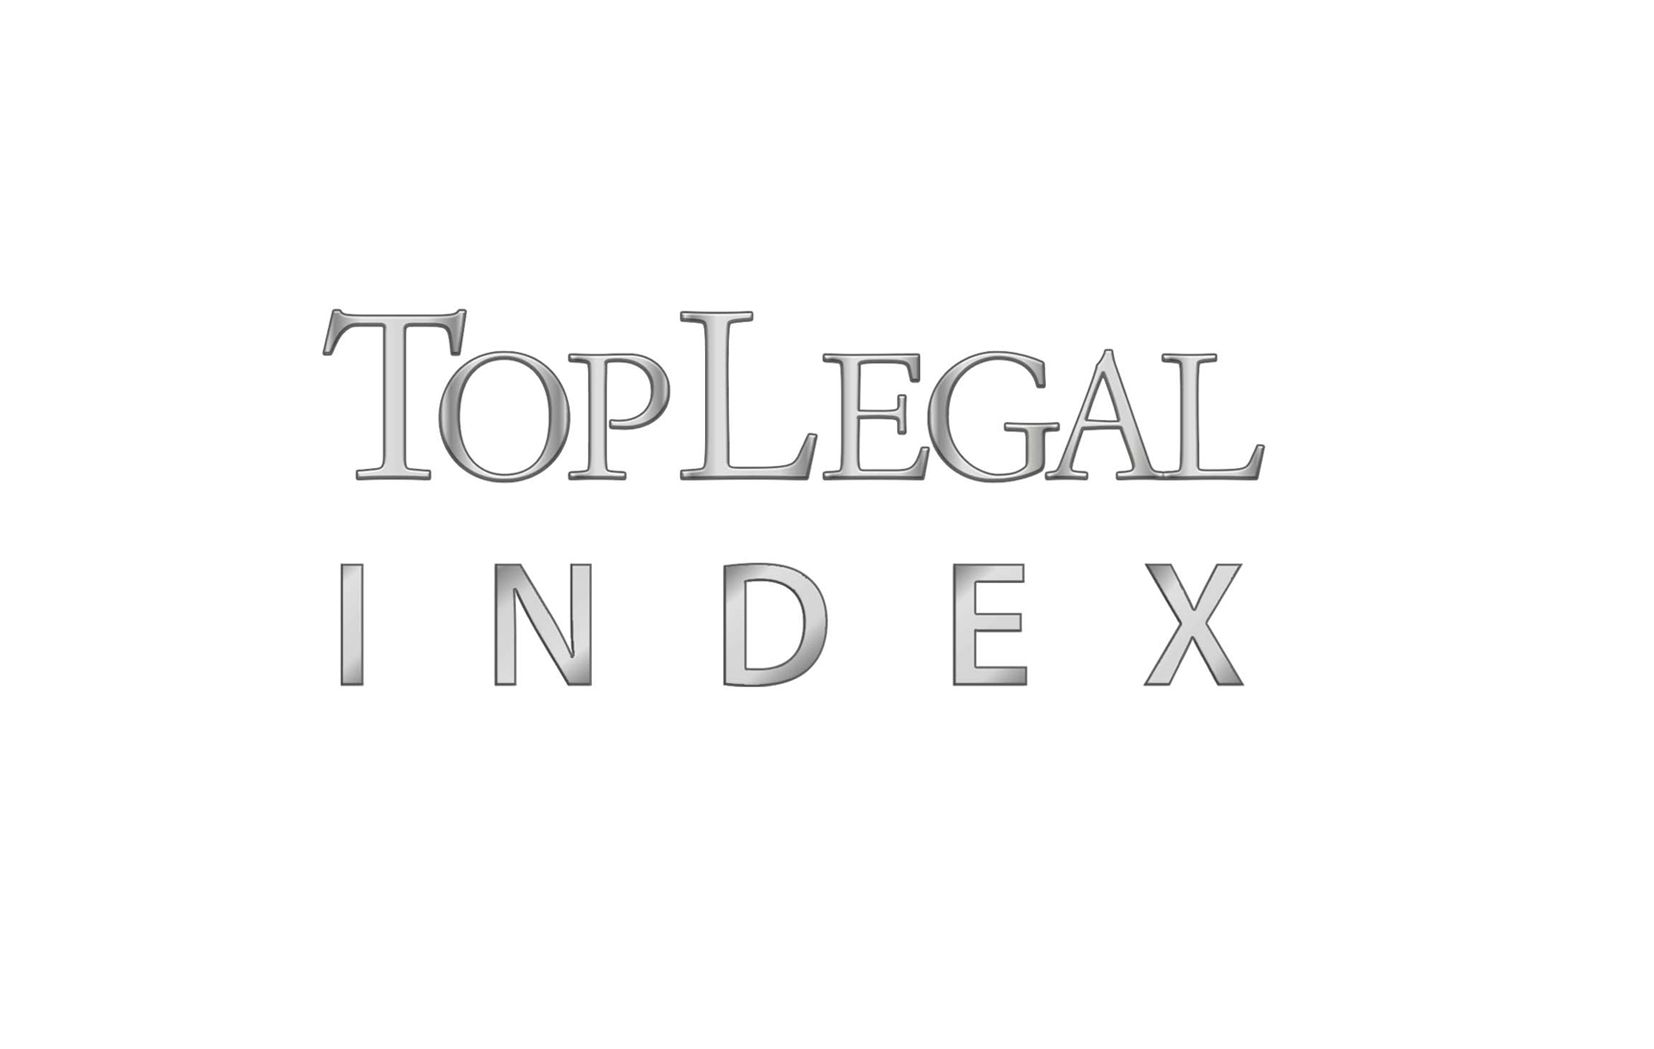 TopLegal Index stabile a ottobre